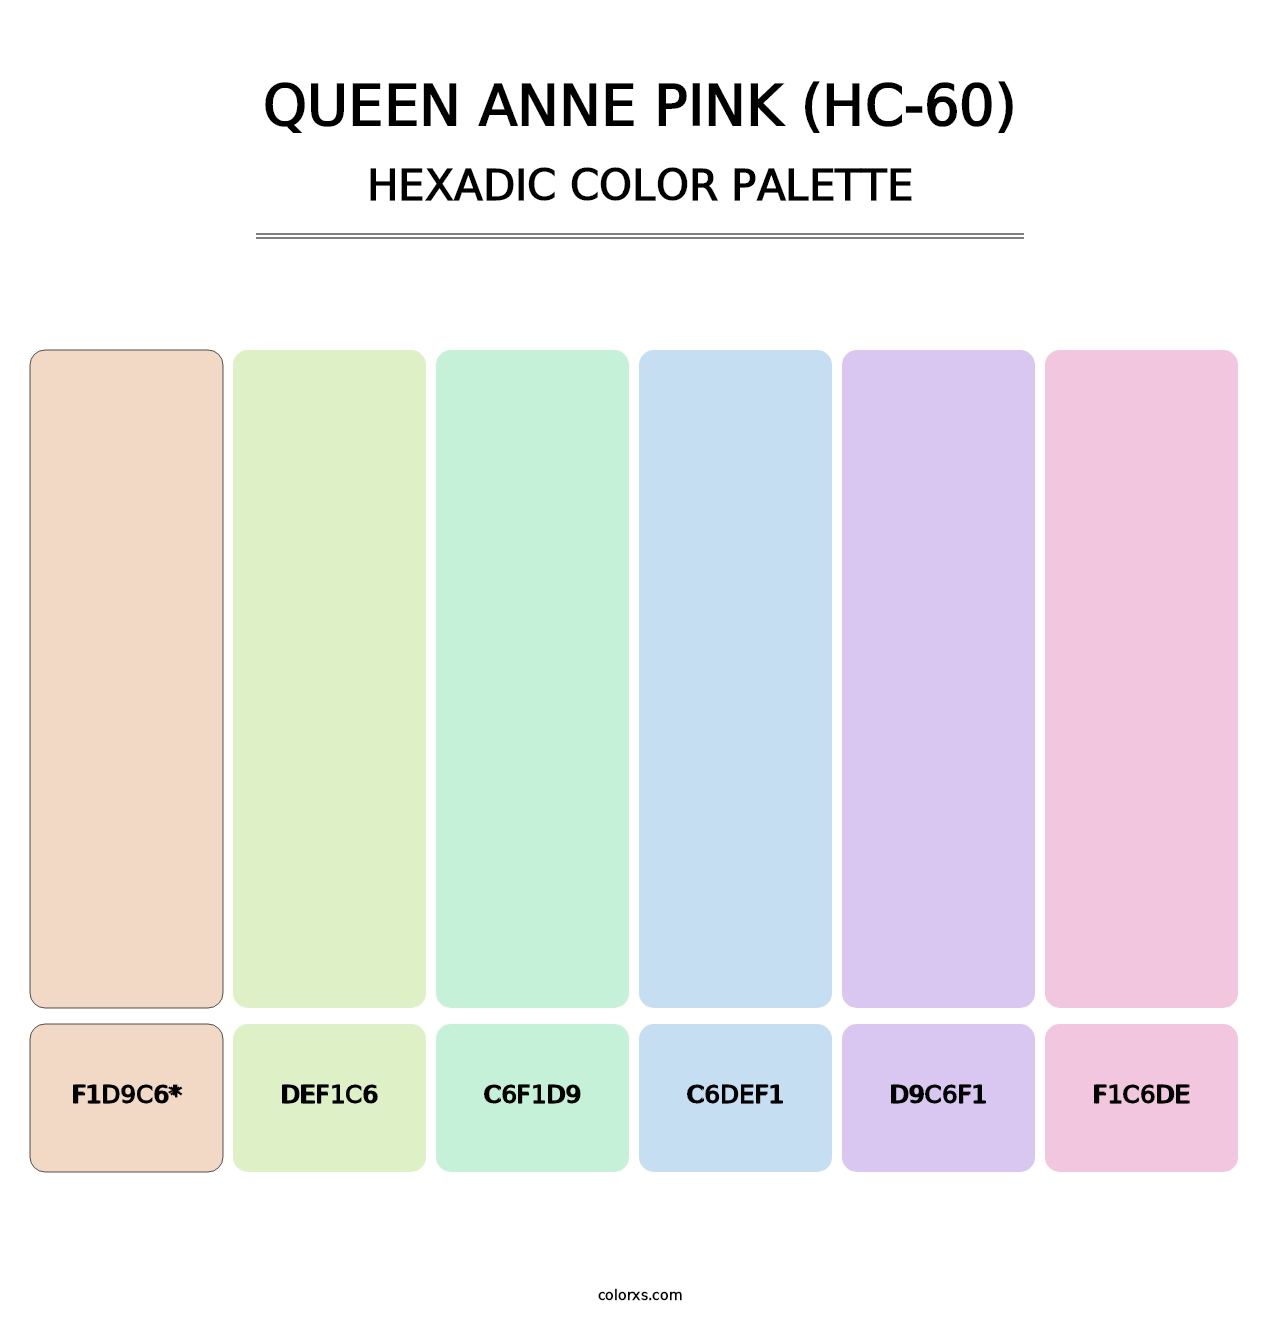 Queen Anne Pink (HC-60) - Hexadic Color Palette